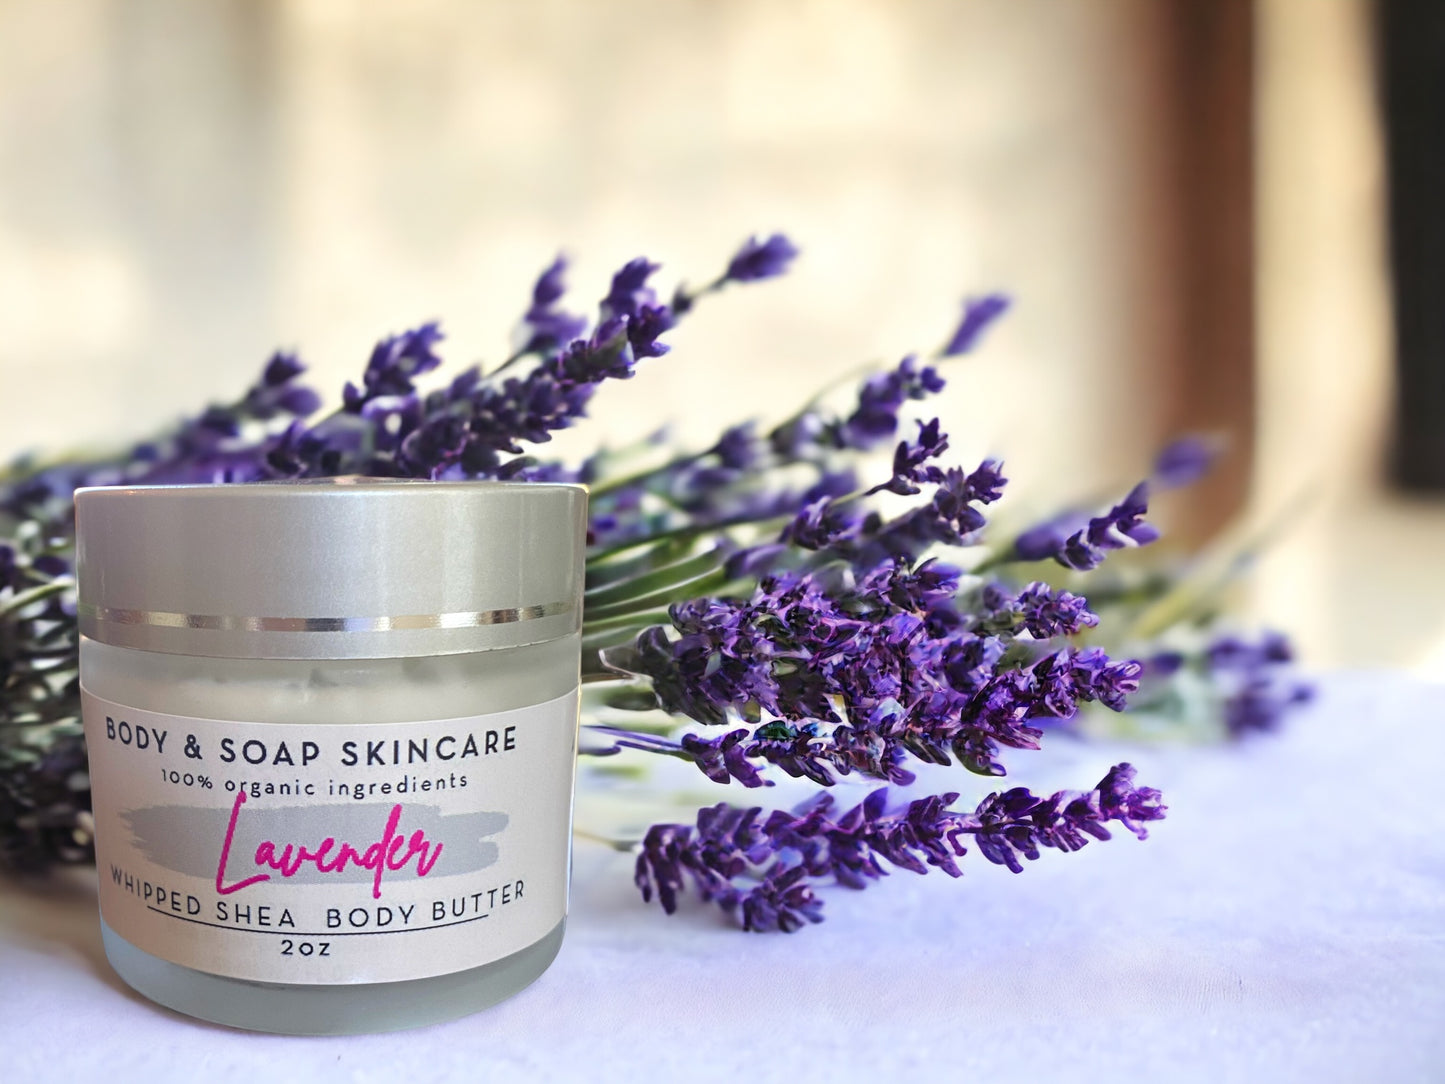 Whipped Shea Body Butter: Lavender - Body & Soap Skincare